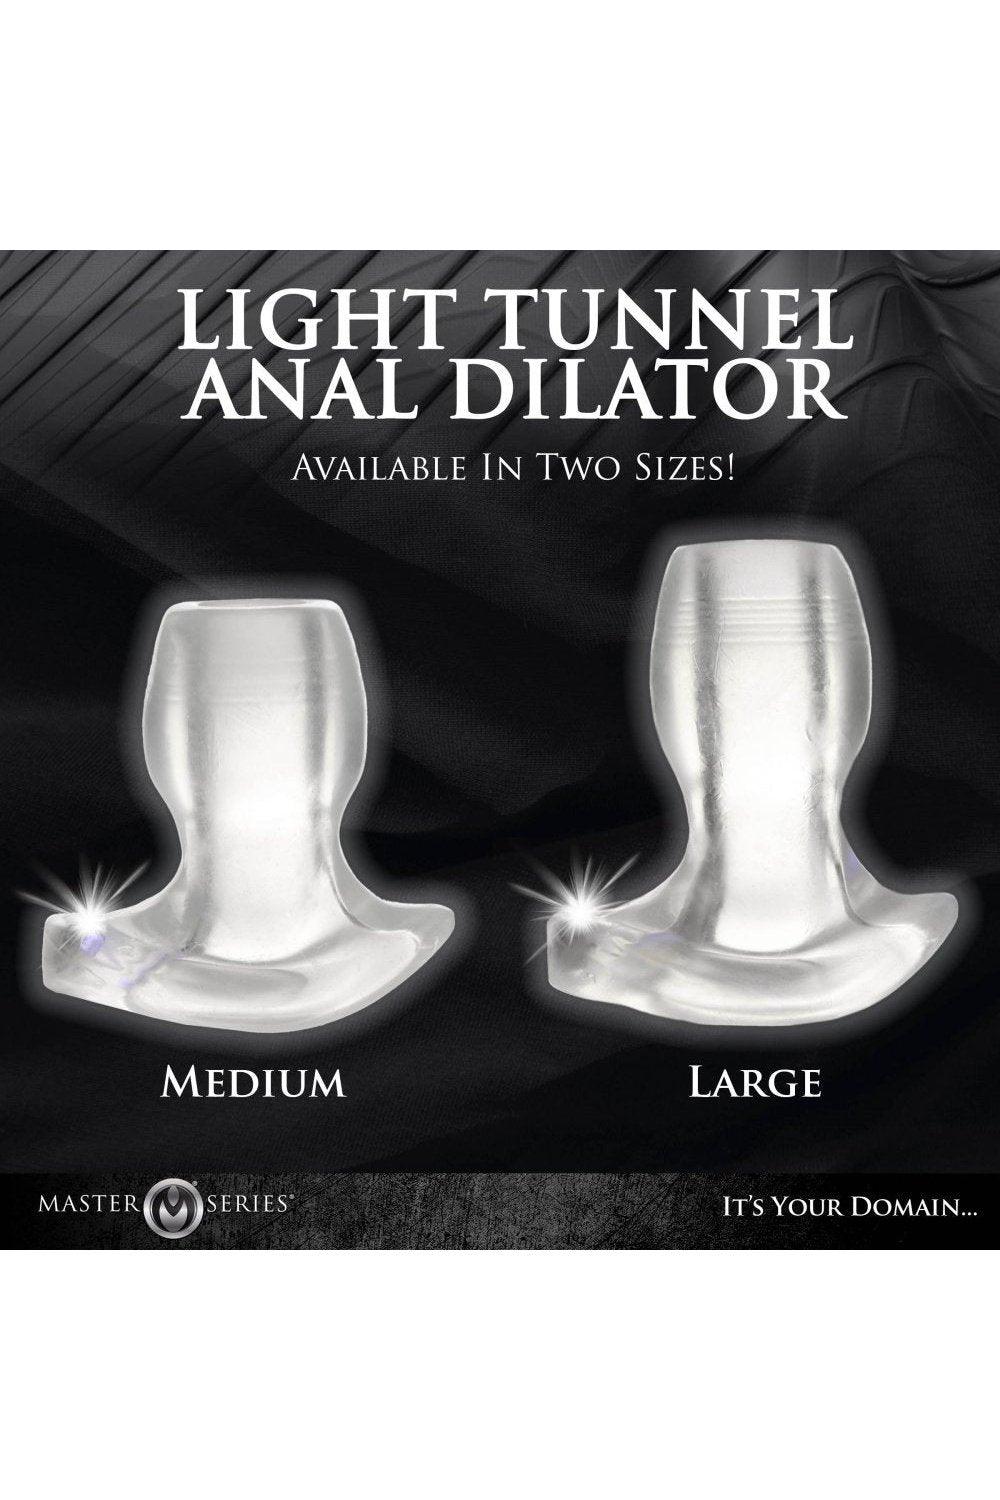 Light-Tunnel Light-Up Anal Dilator - Medium and Large - Sex On the Go